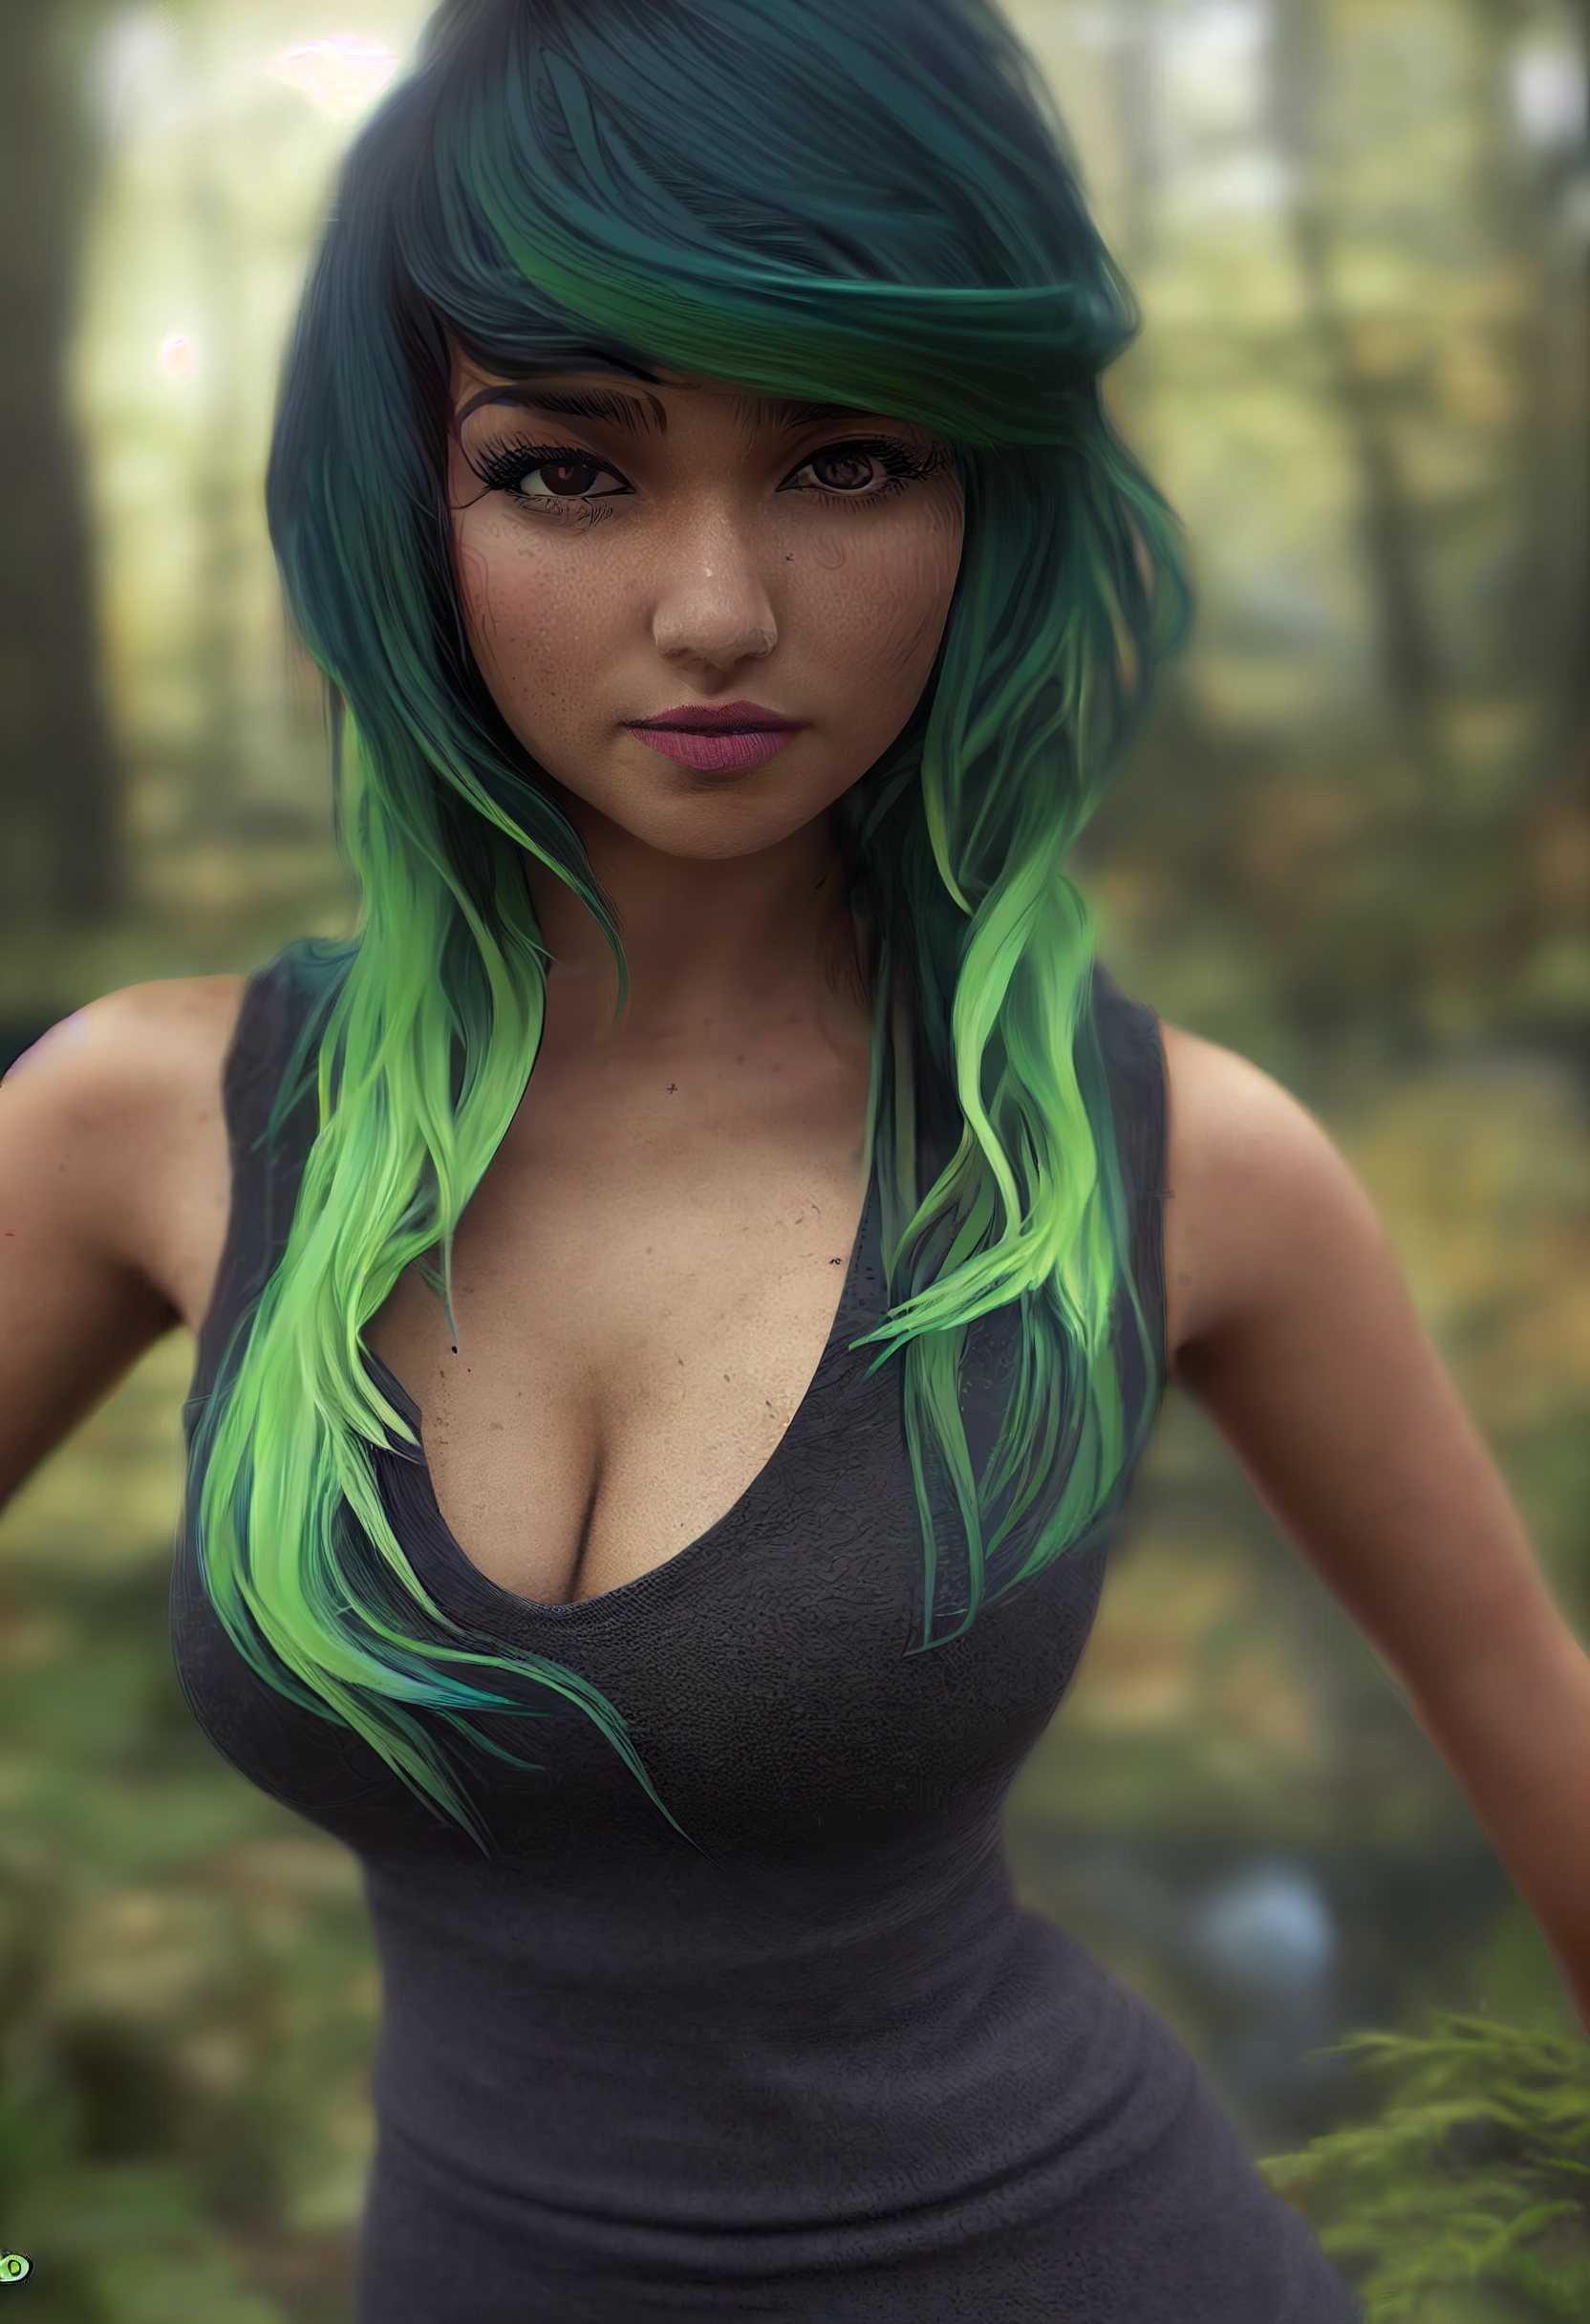 Wavy Blue-Green Hair, Forest